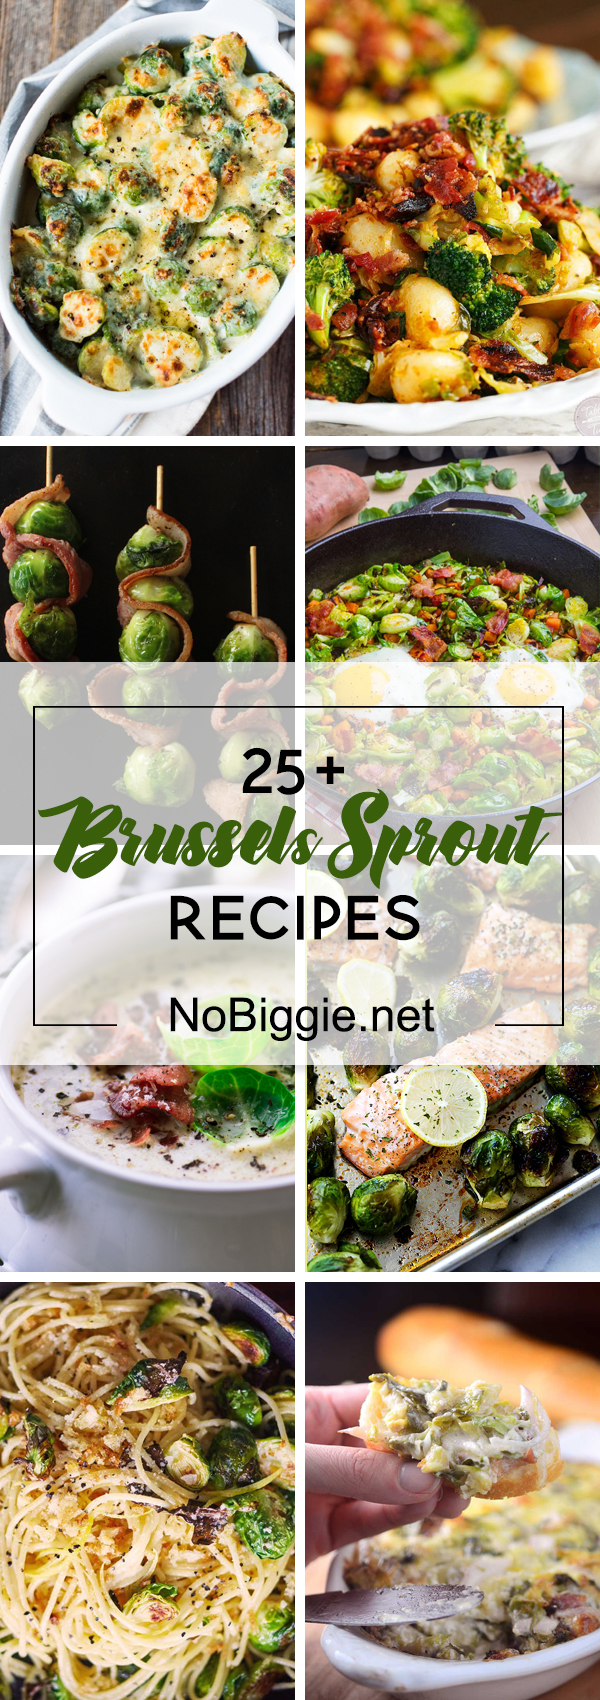 25+ Brussel Sprout Recipes | NoBiggie.net